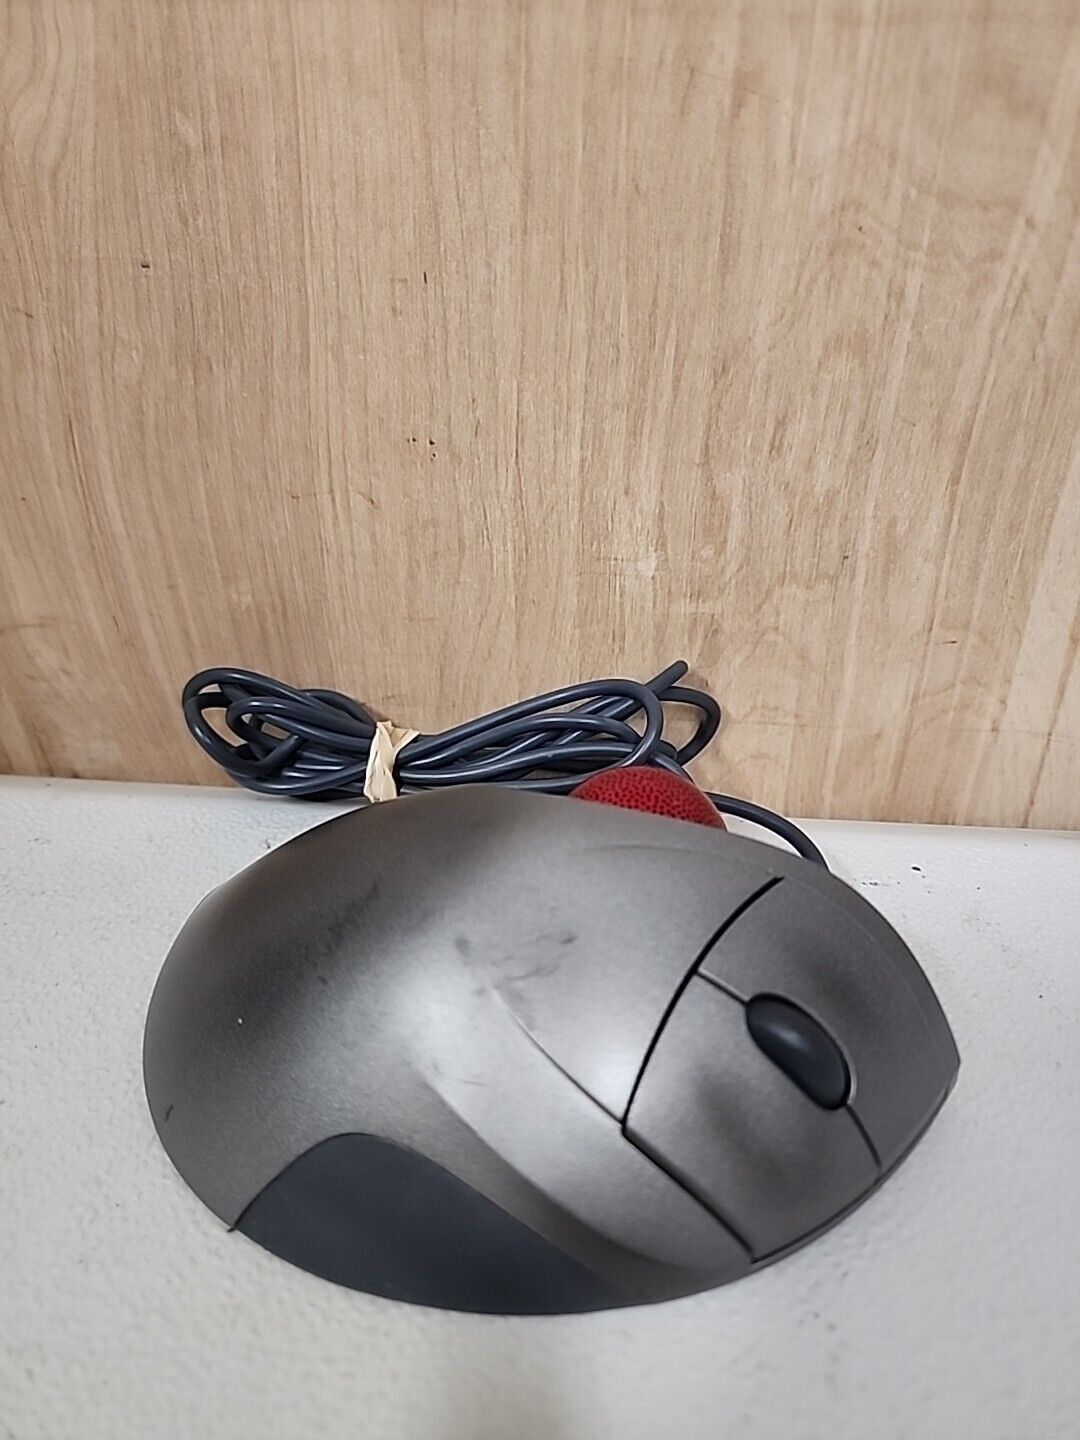 Logitech Trackman Wheel Optical Trackball Mouse Silver T-BB18 804360-1000